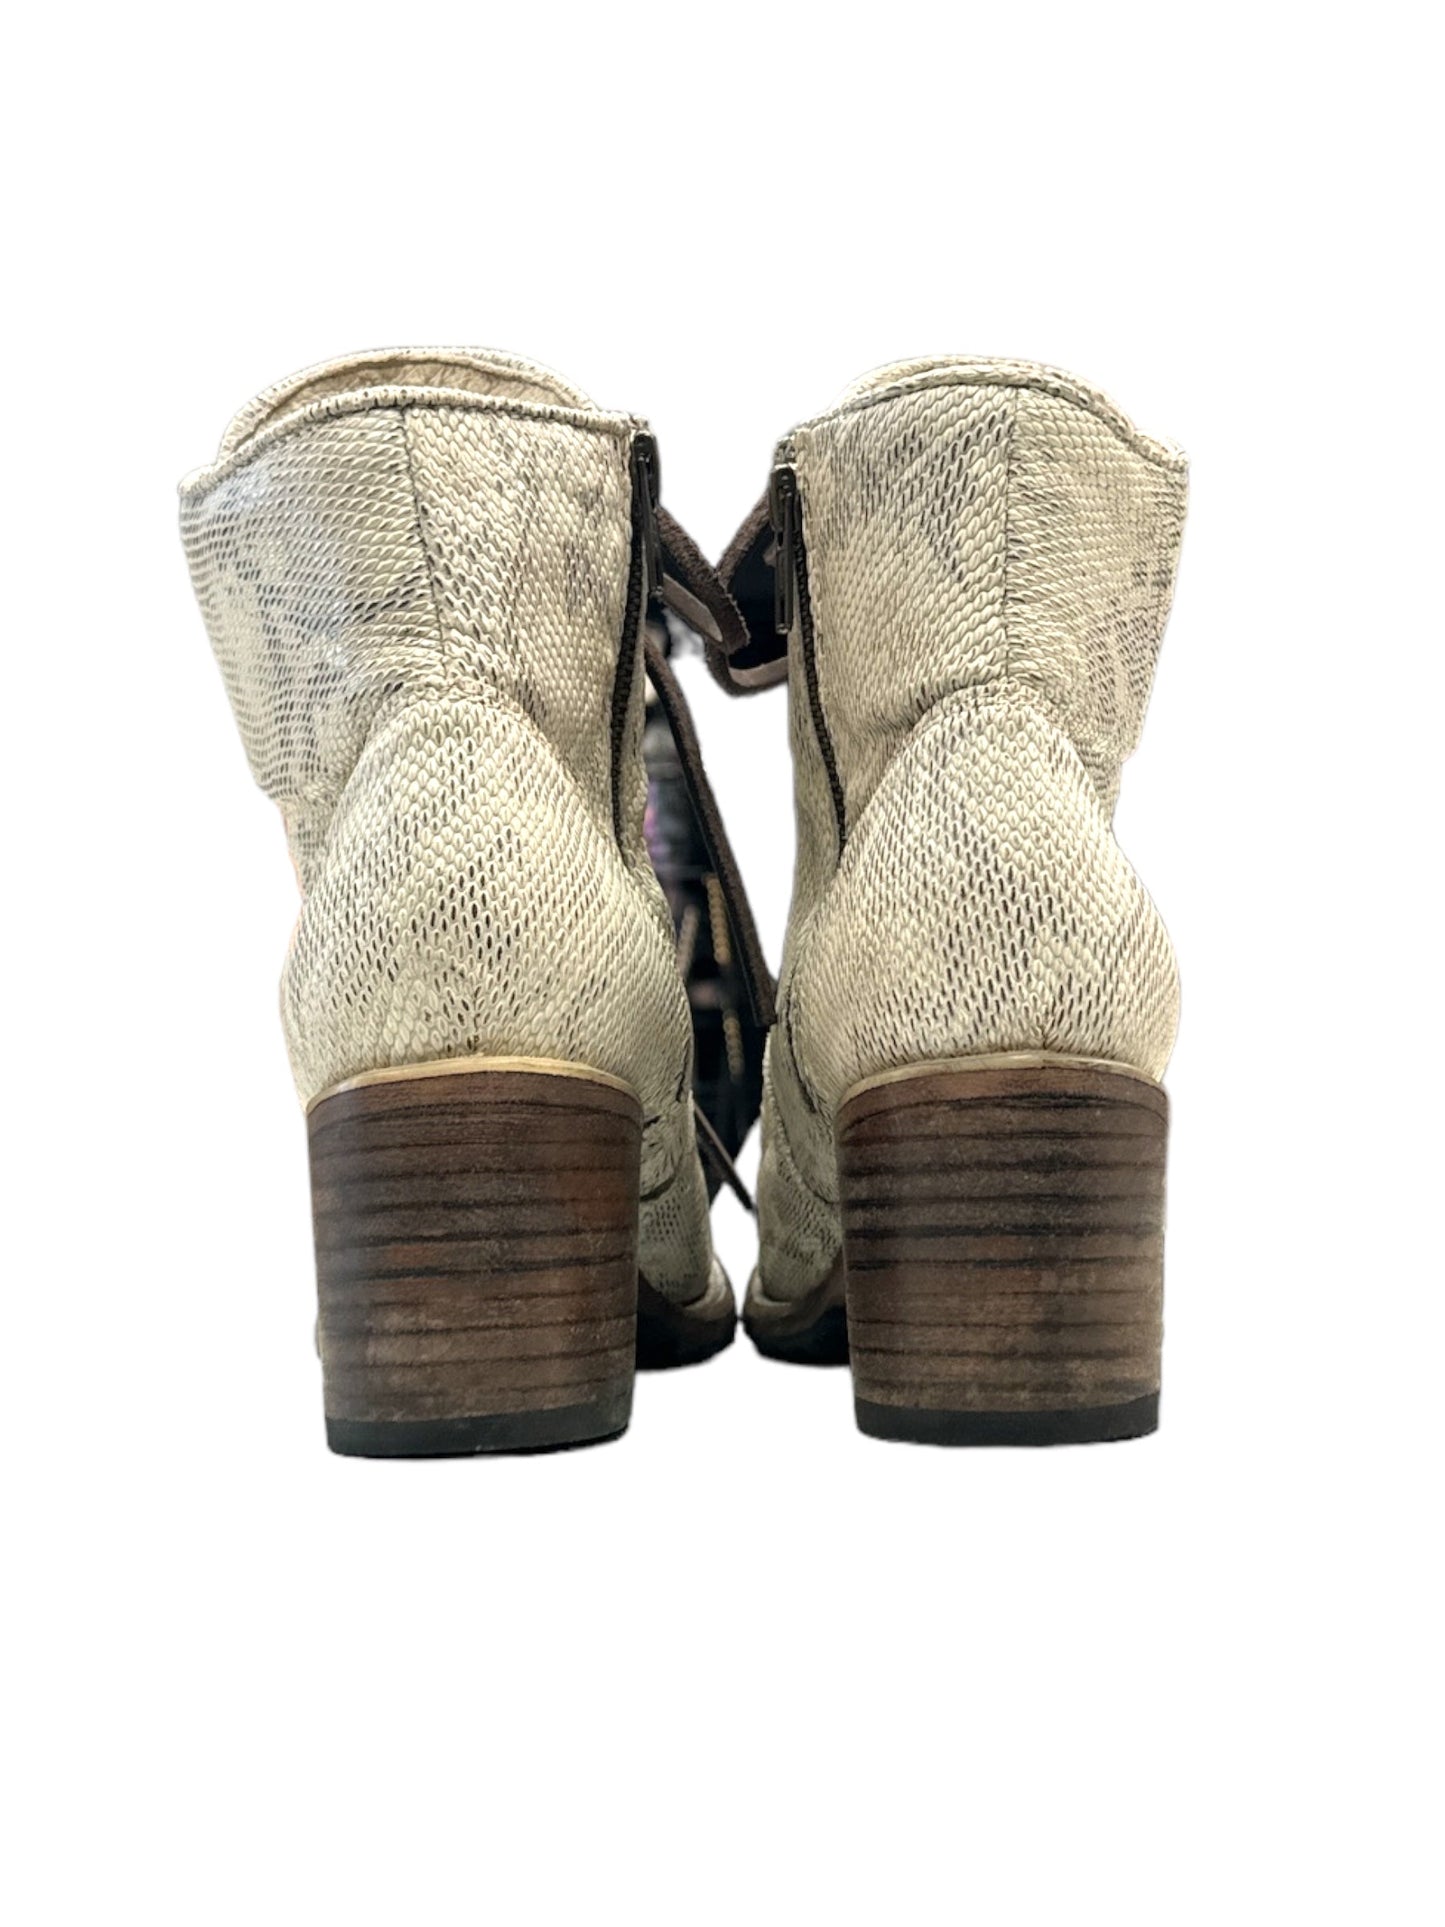 Animal Print Boots Mid-calf Heels Cma, Size 9